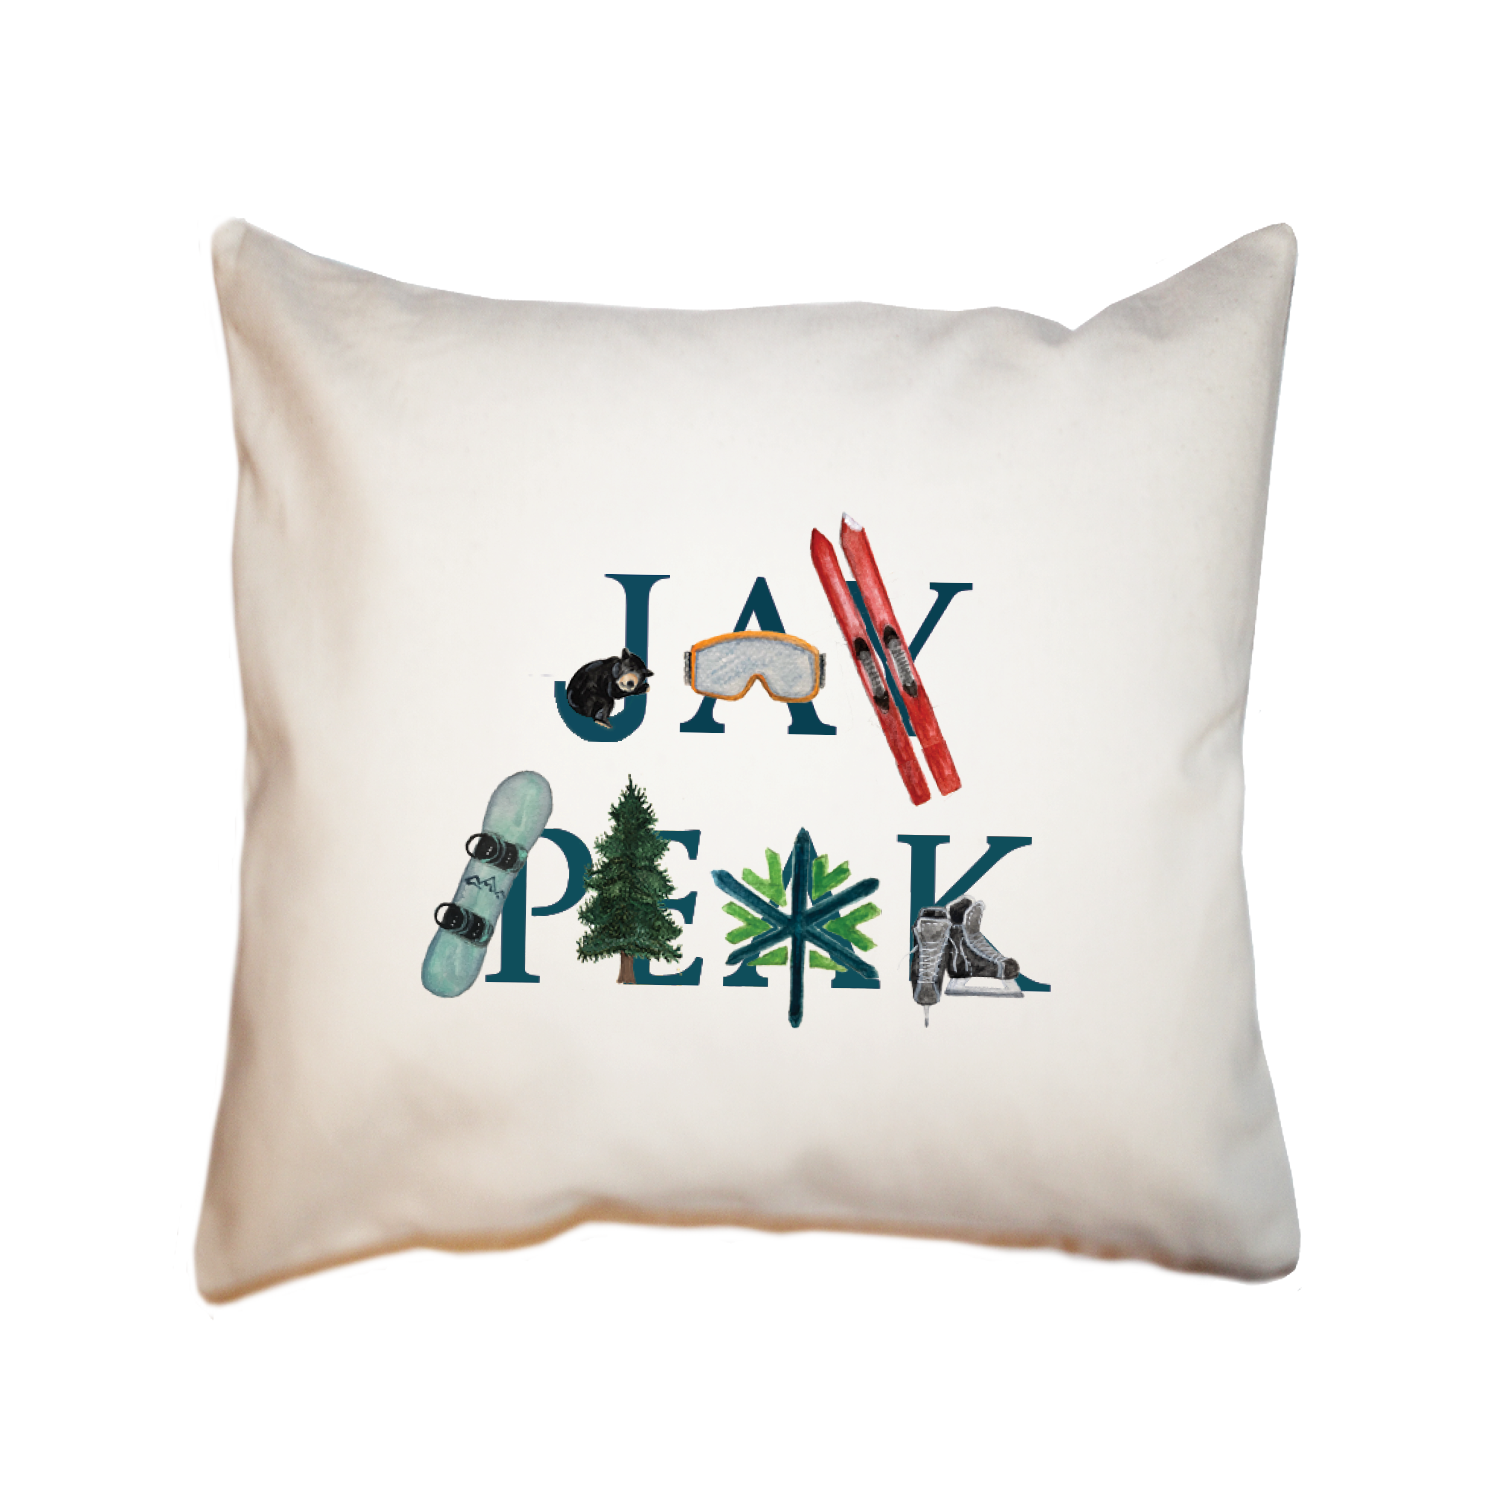 jay peak square pillow